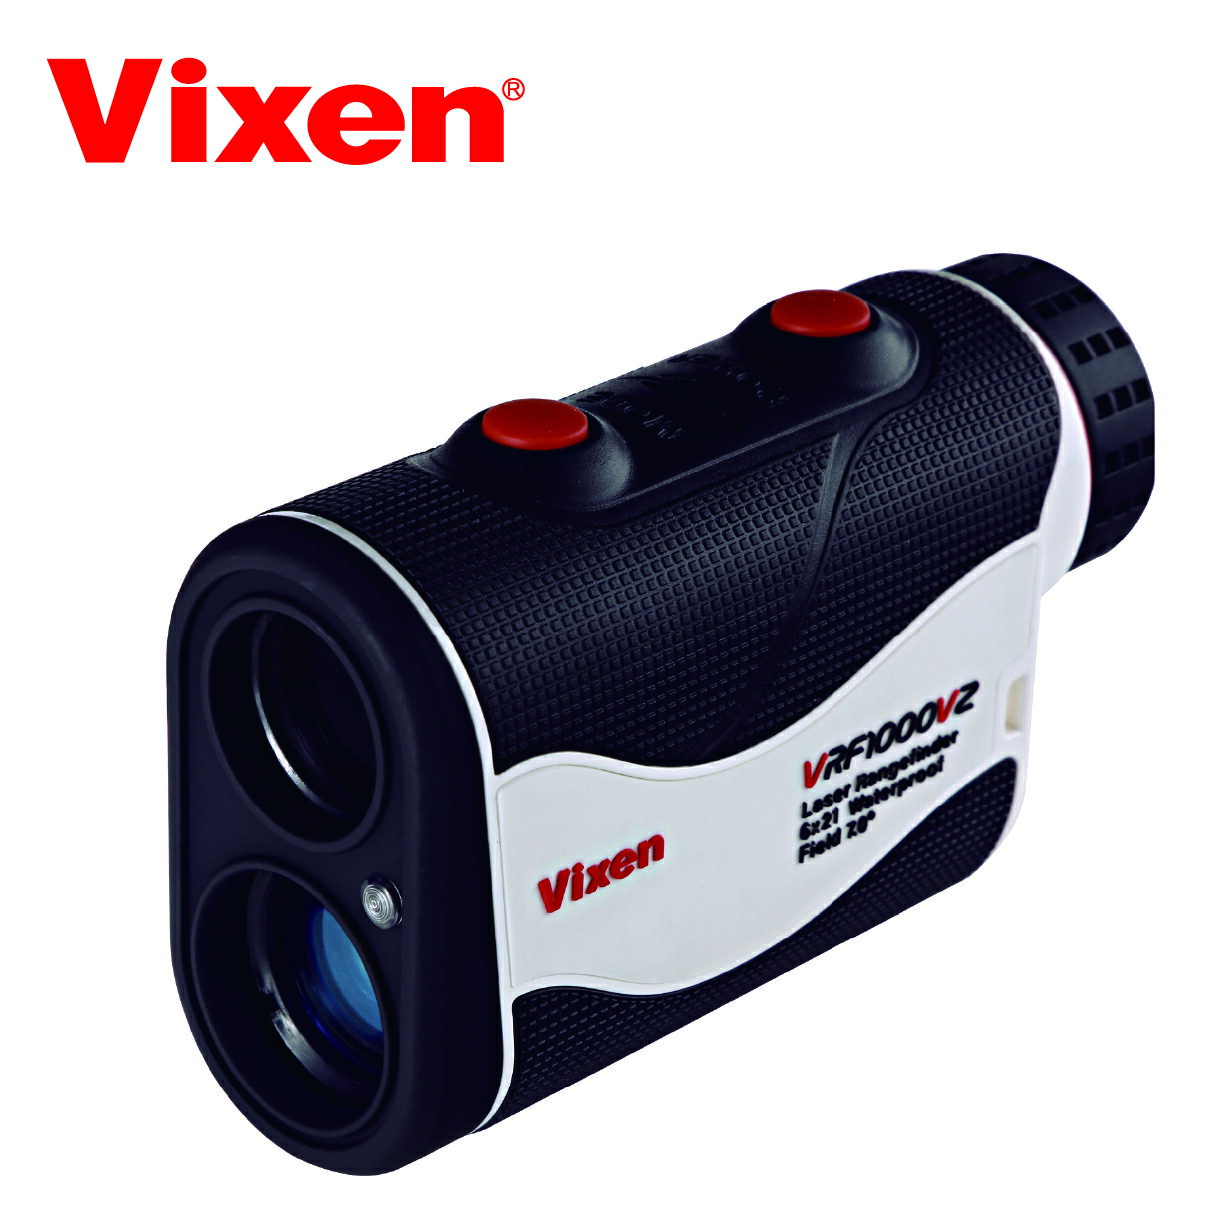 【Vixen ビクセン】単眼鏡 レーザー距離計 VRF1000VZ_全天候型